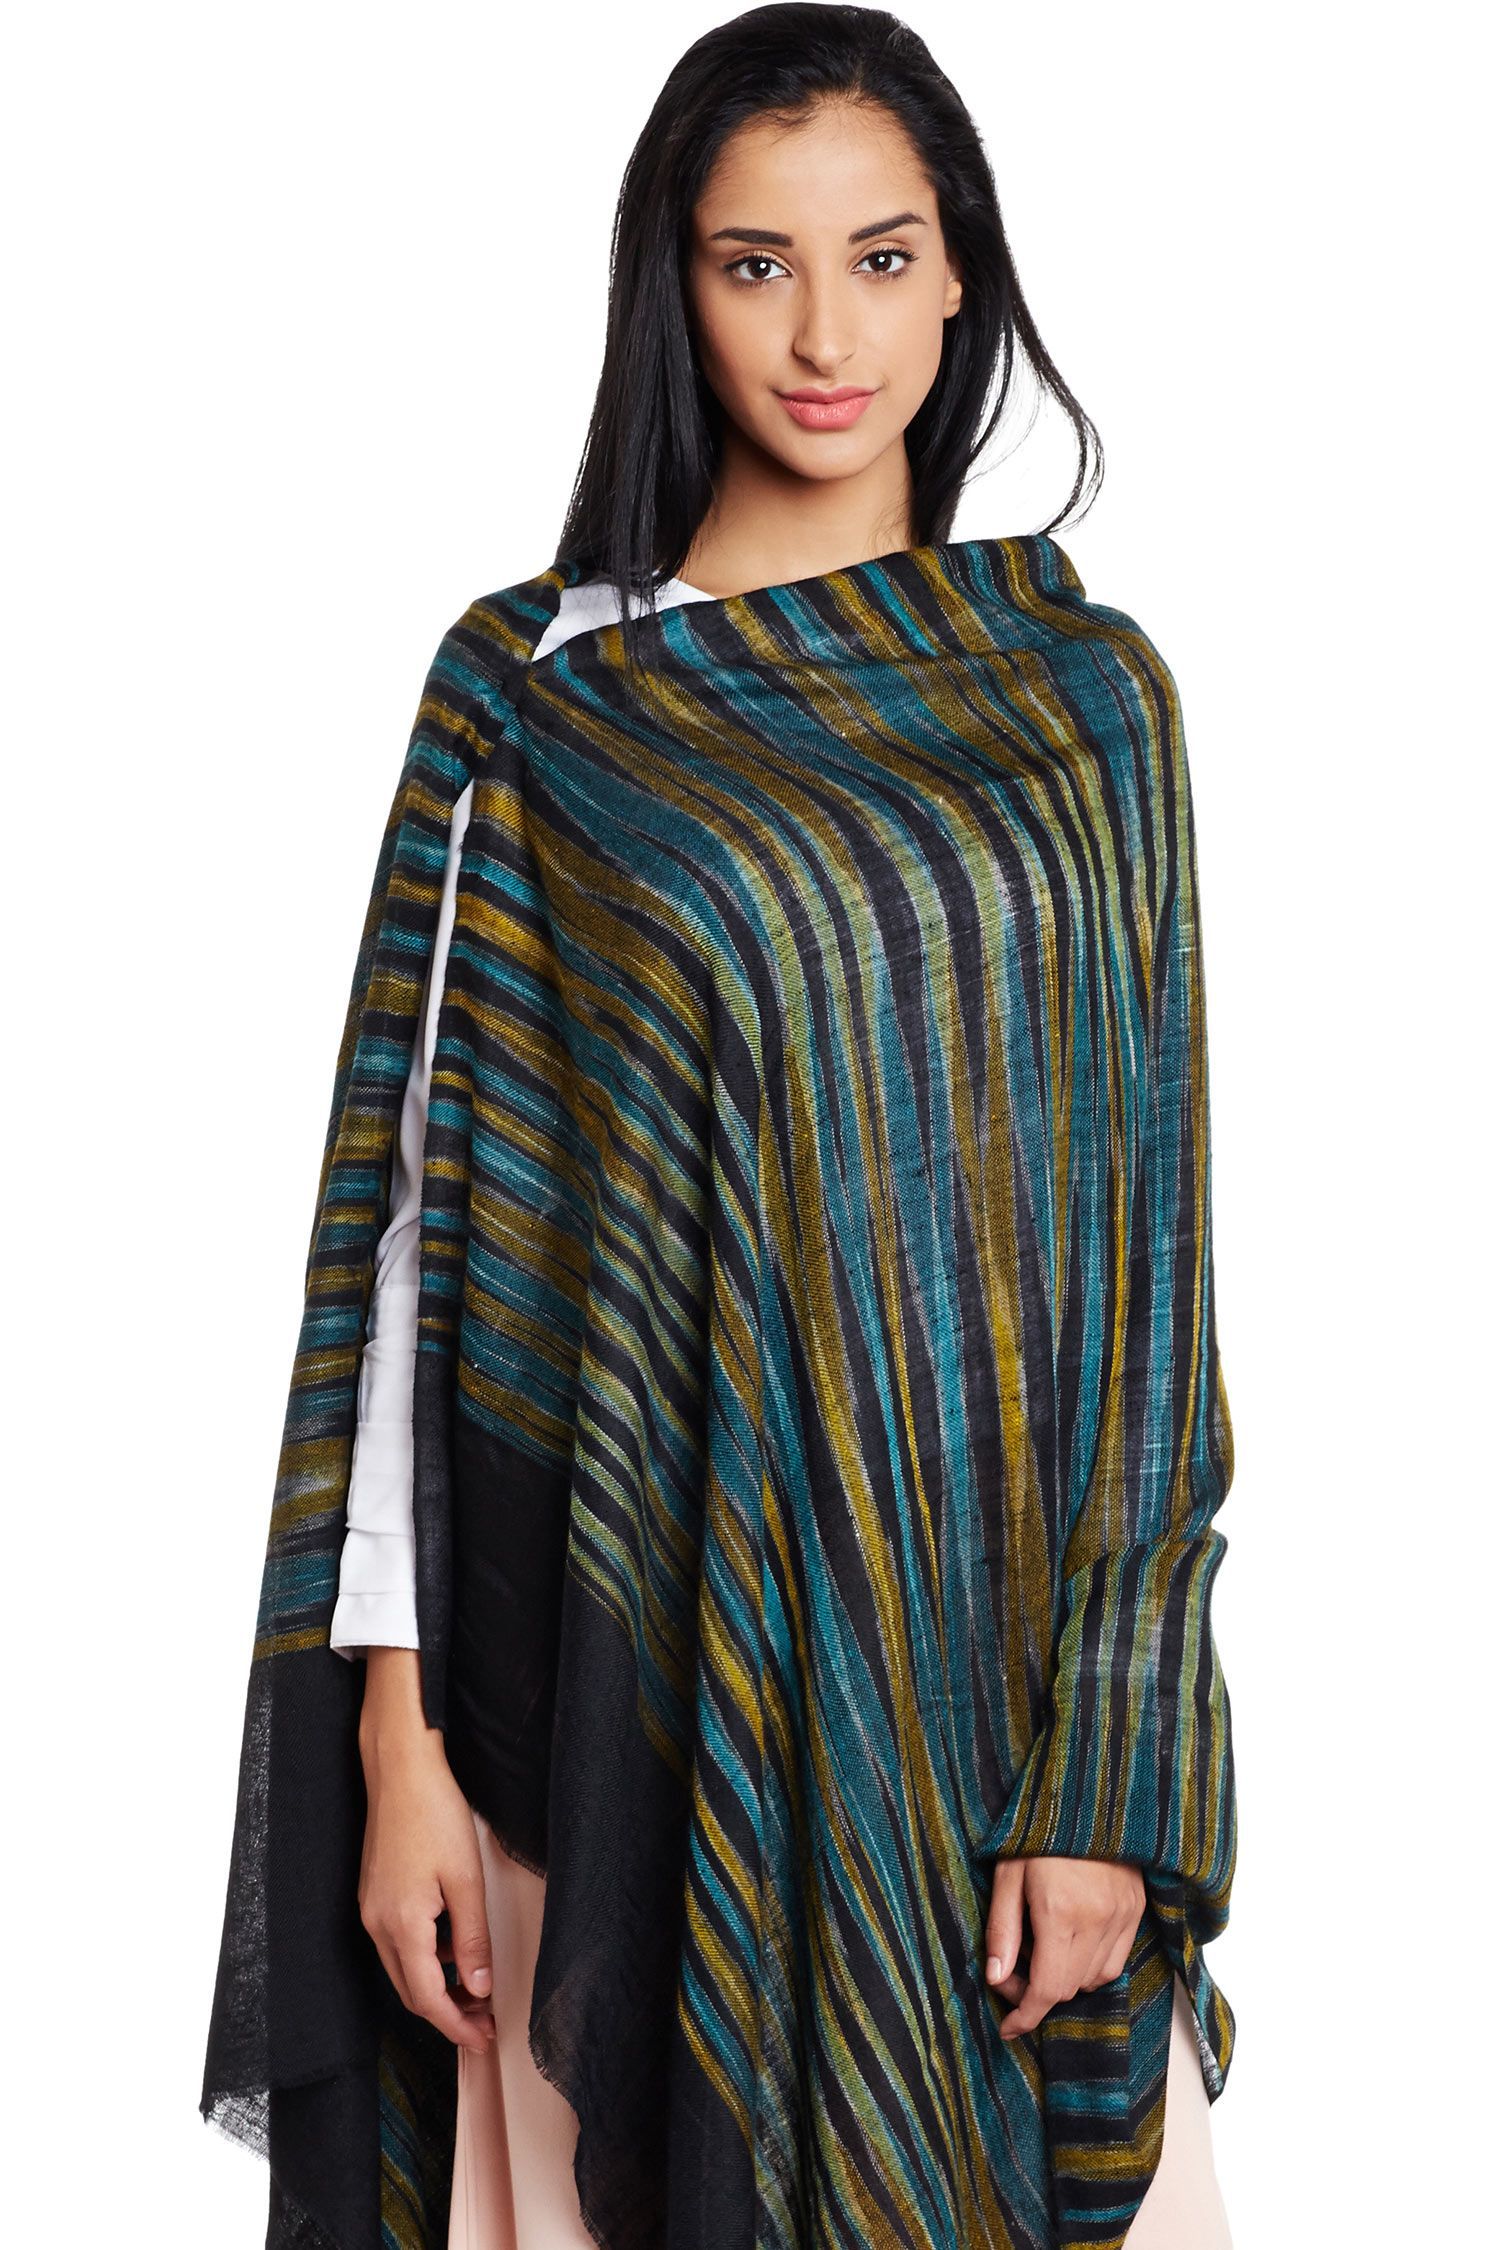 Black & Blue Ikat Pashmina Shawl | Ikat Pattern Shawls